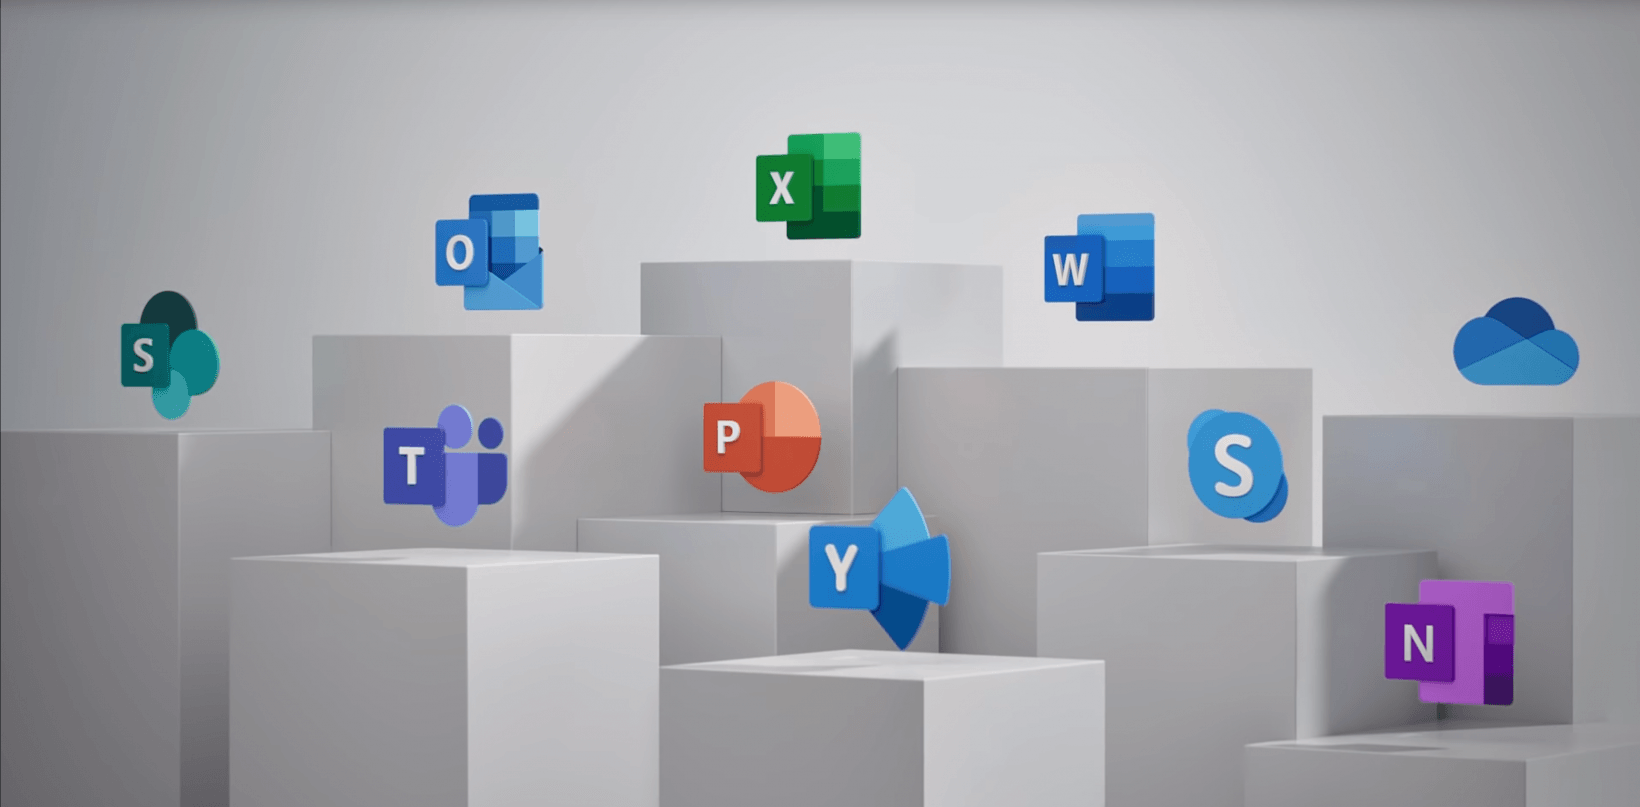 Microsoft Office Logo - Microsoft's new Office logos are a beautiful glimpse of the future